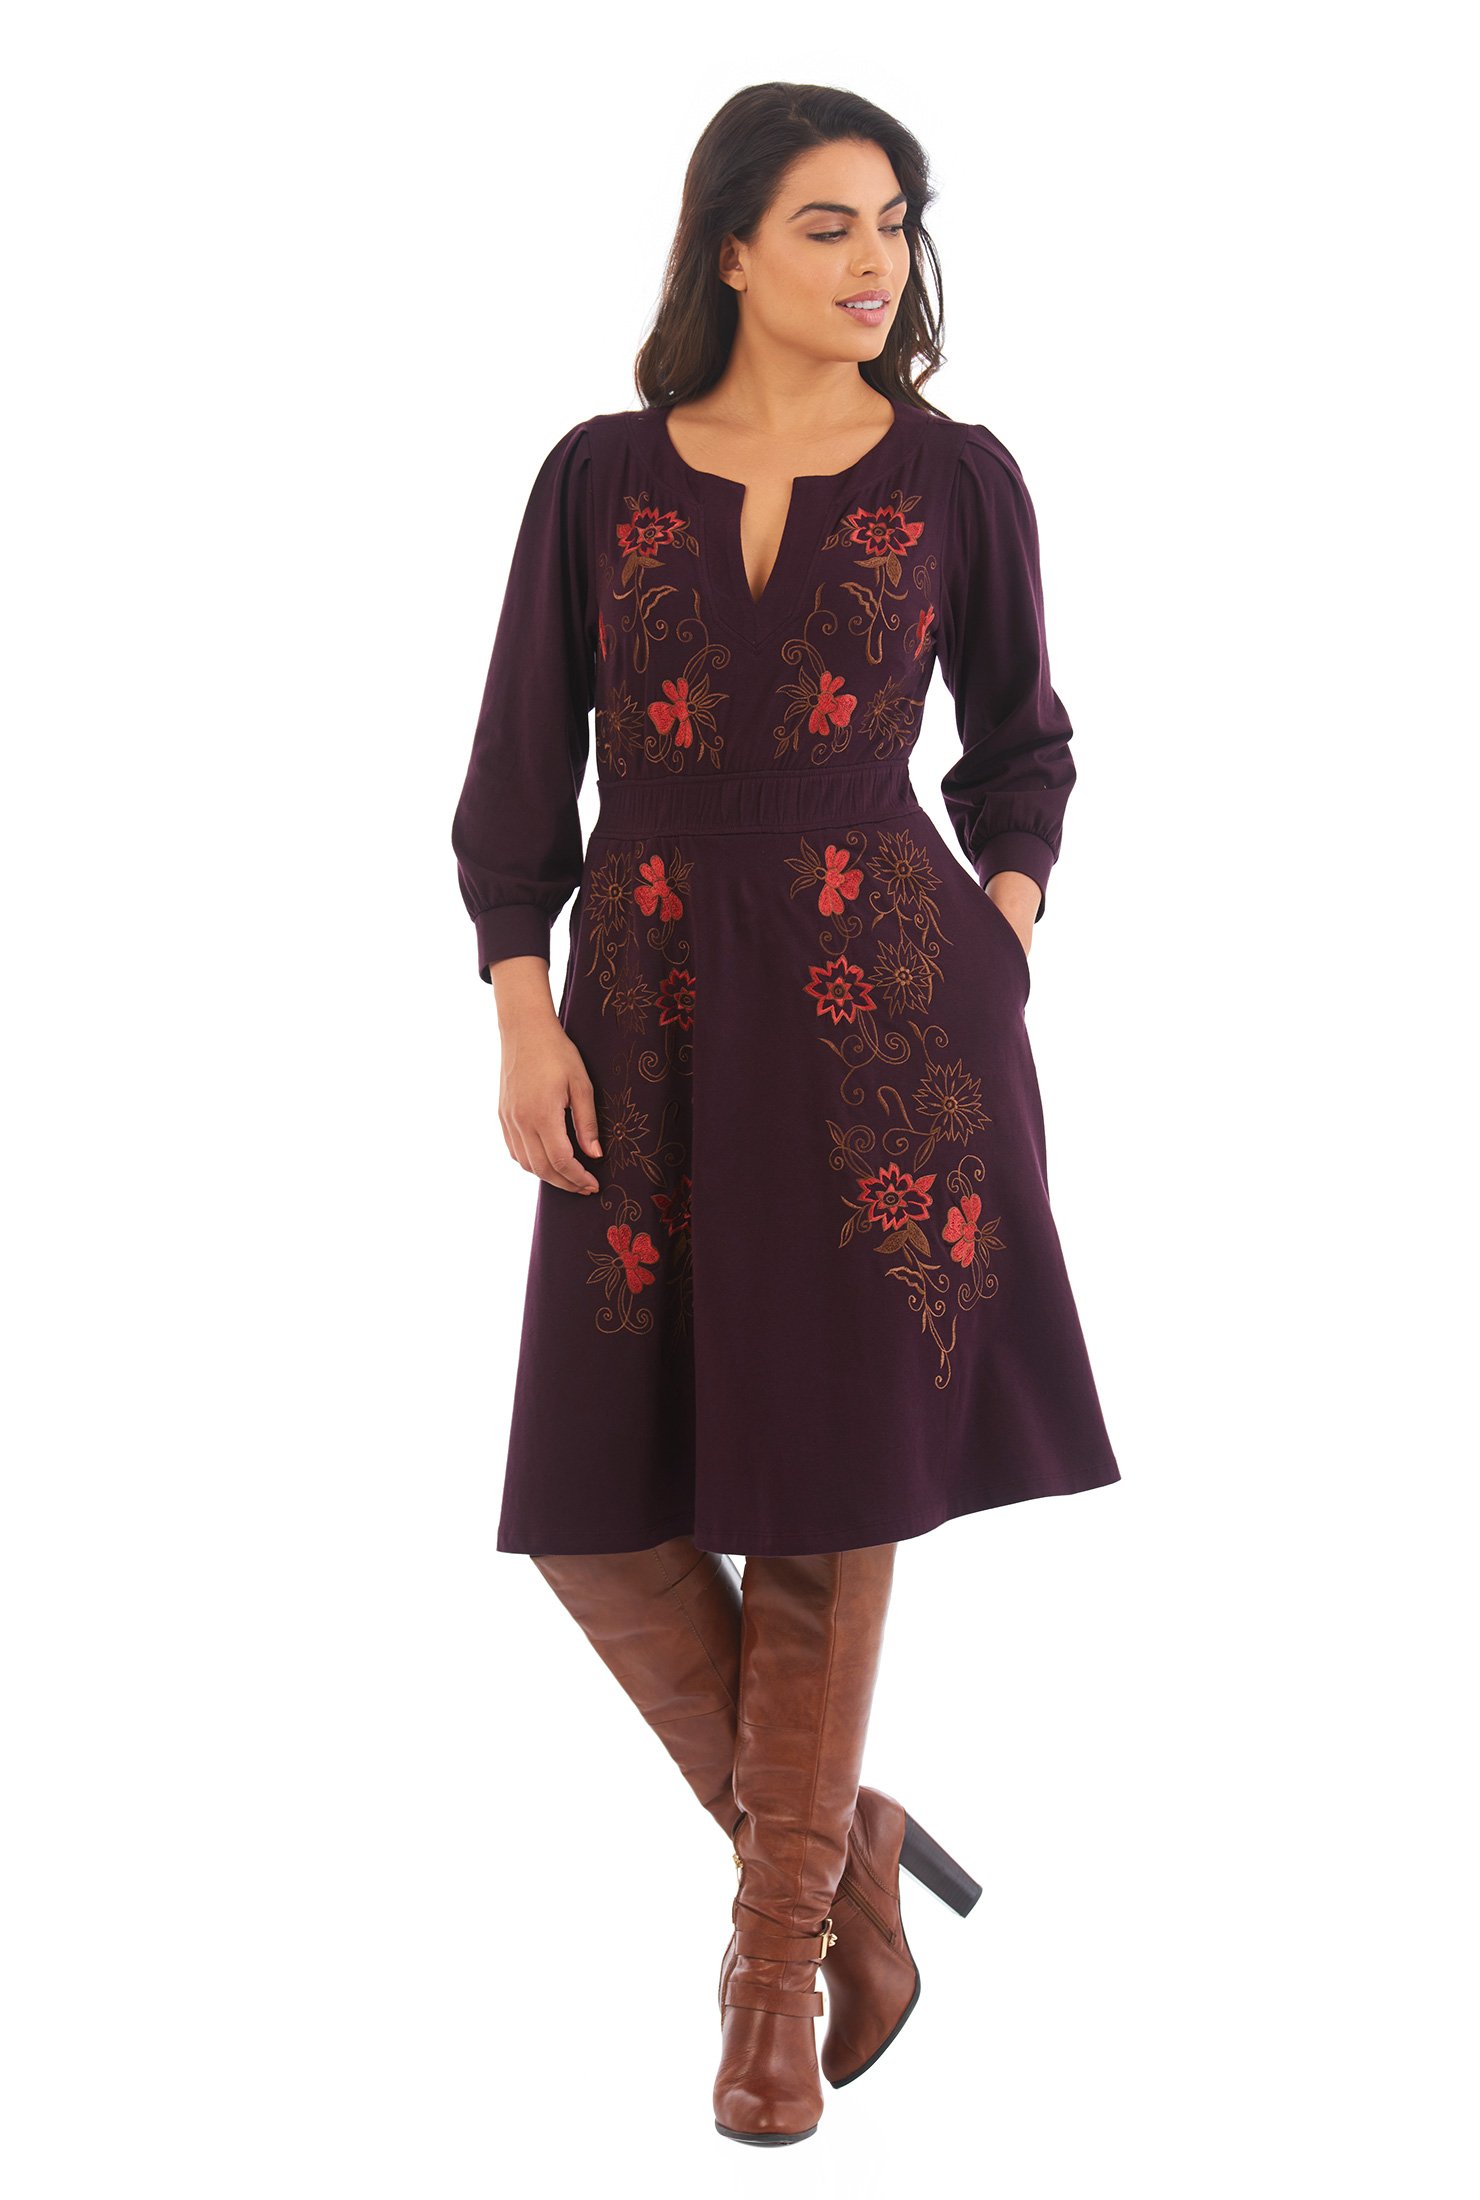 Shop Floral embellished elastic waist cotton knit dress | eShakti